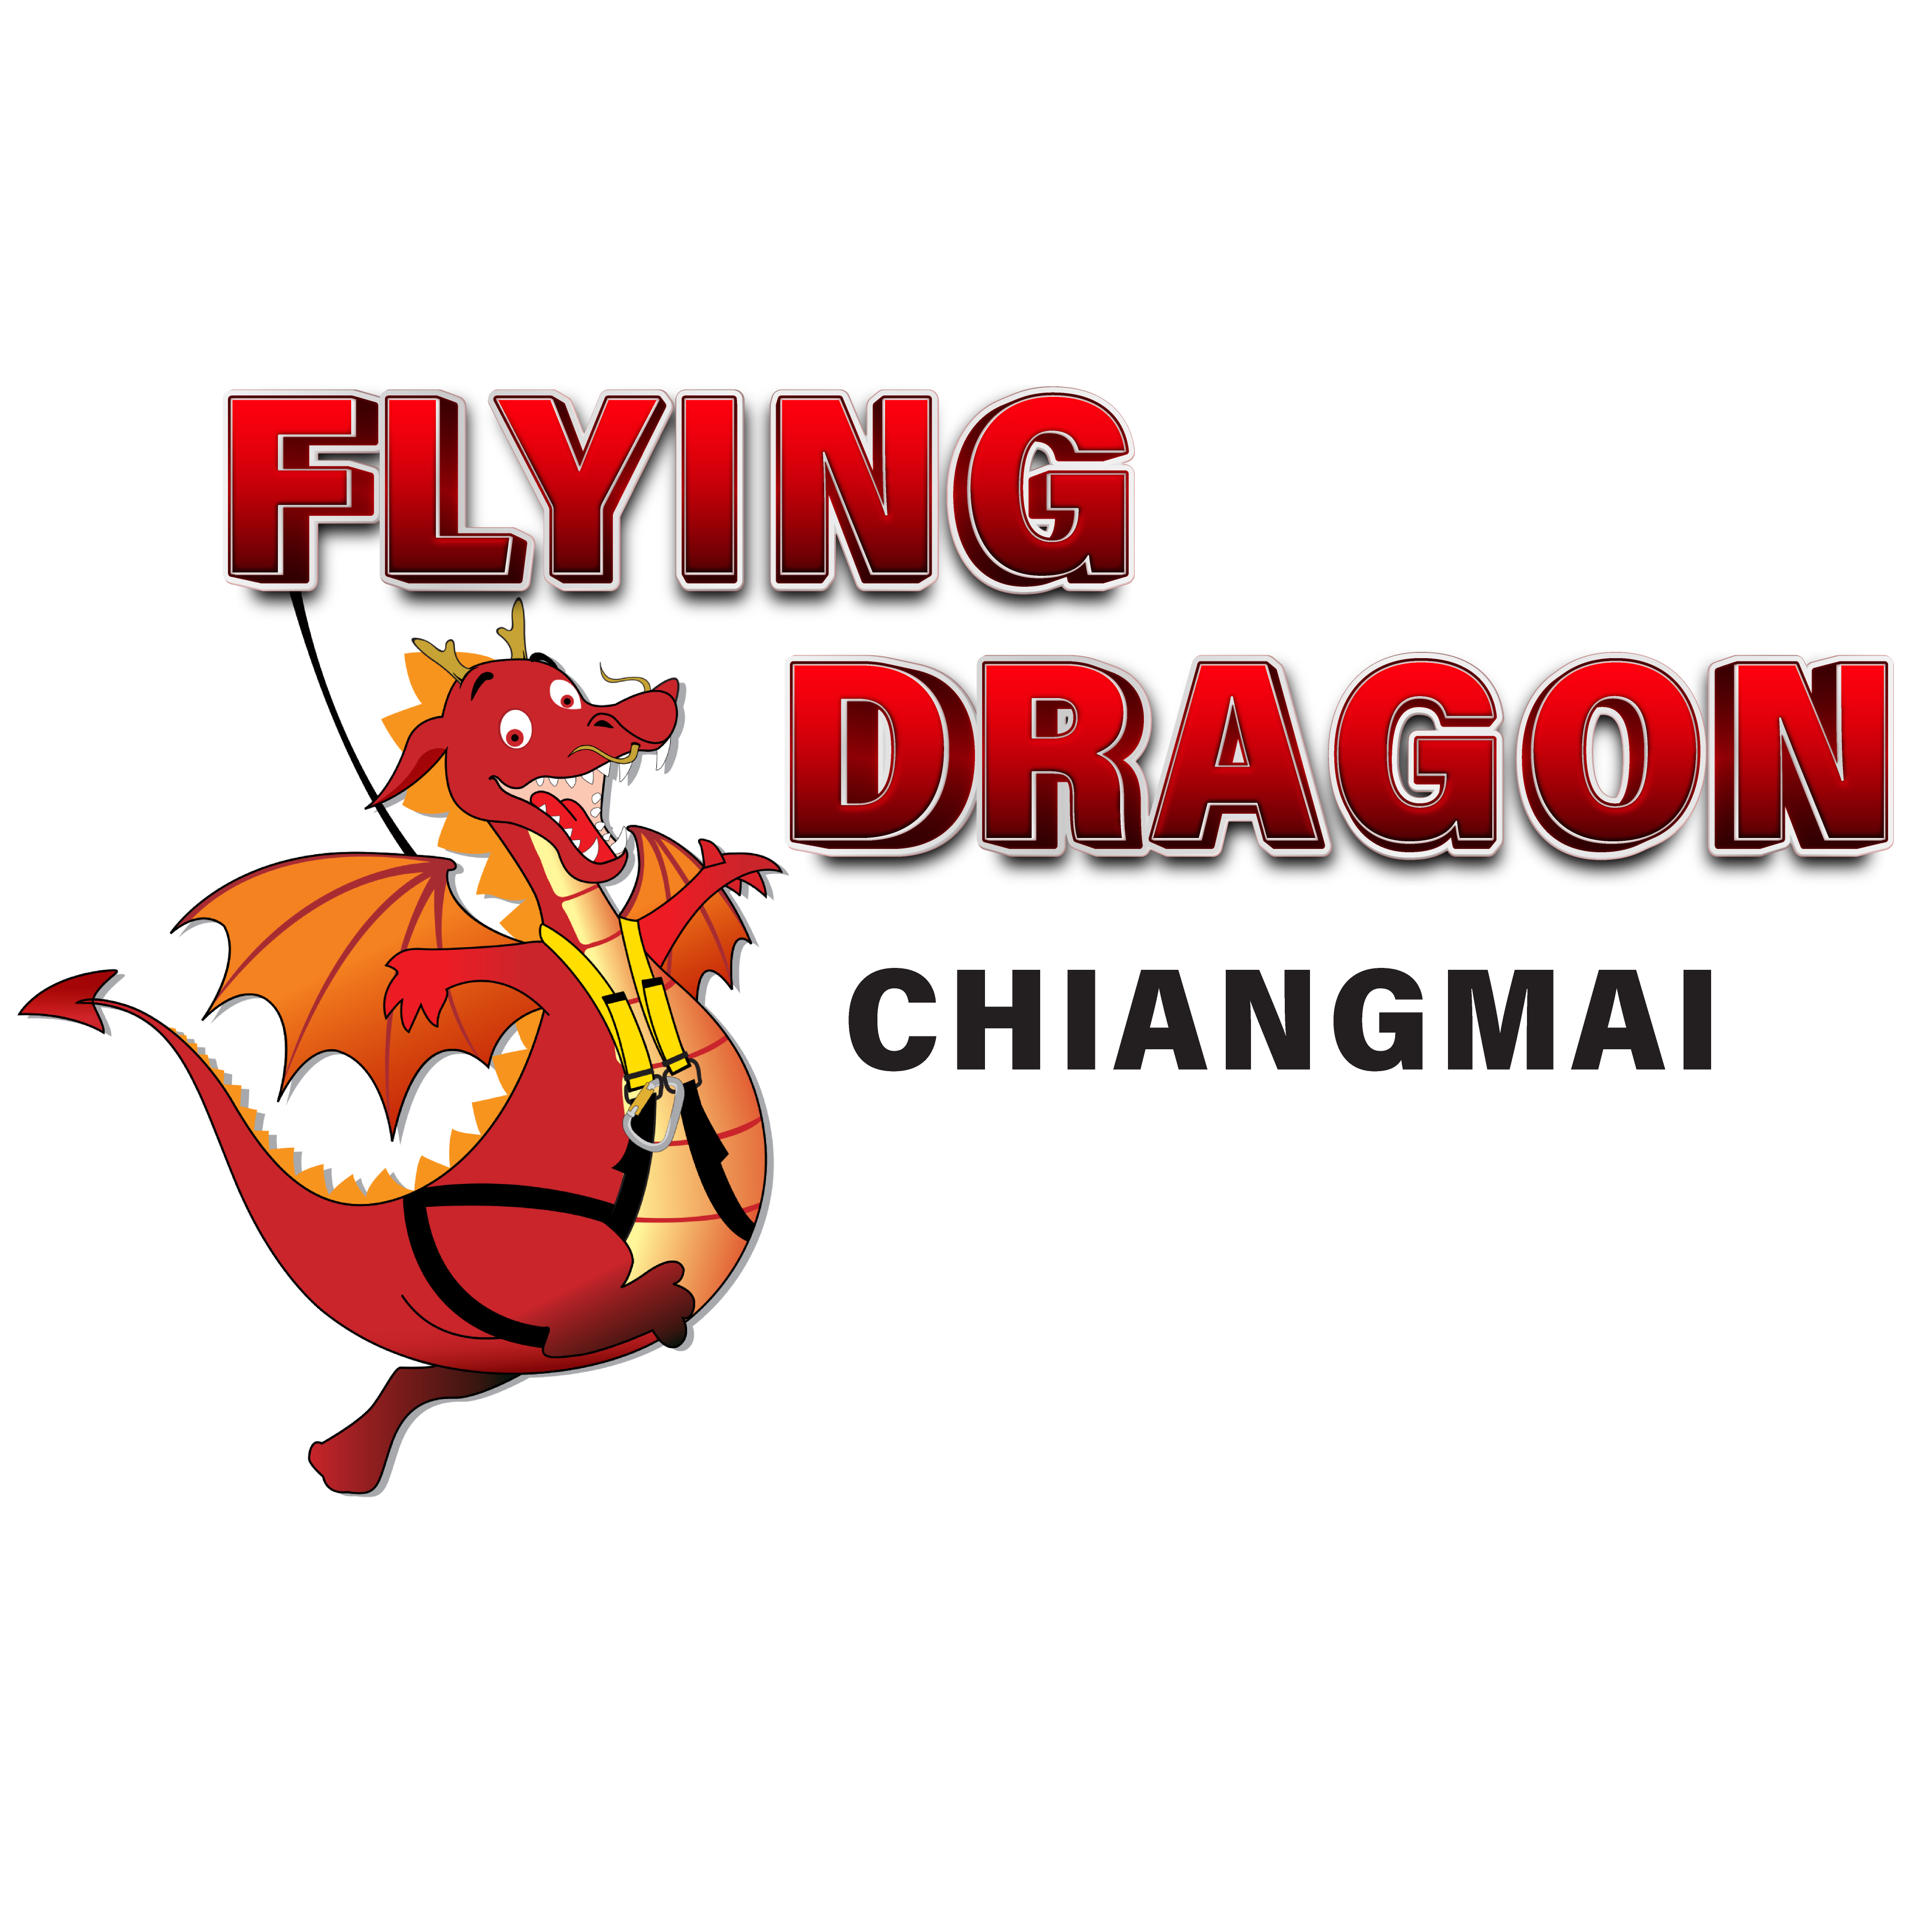 Flying Dragon Chiangmai